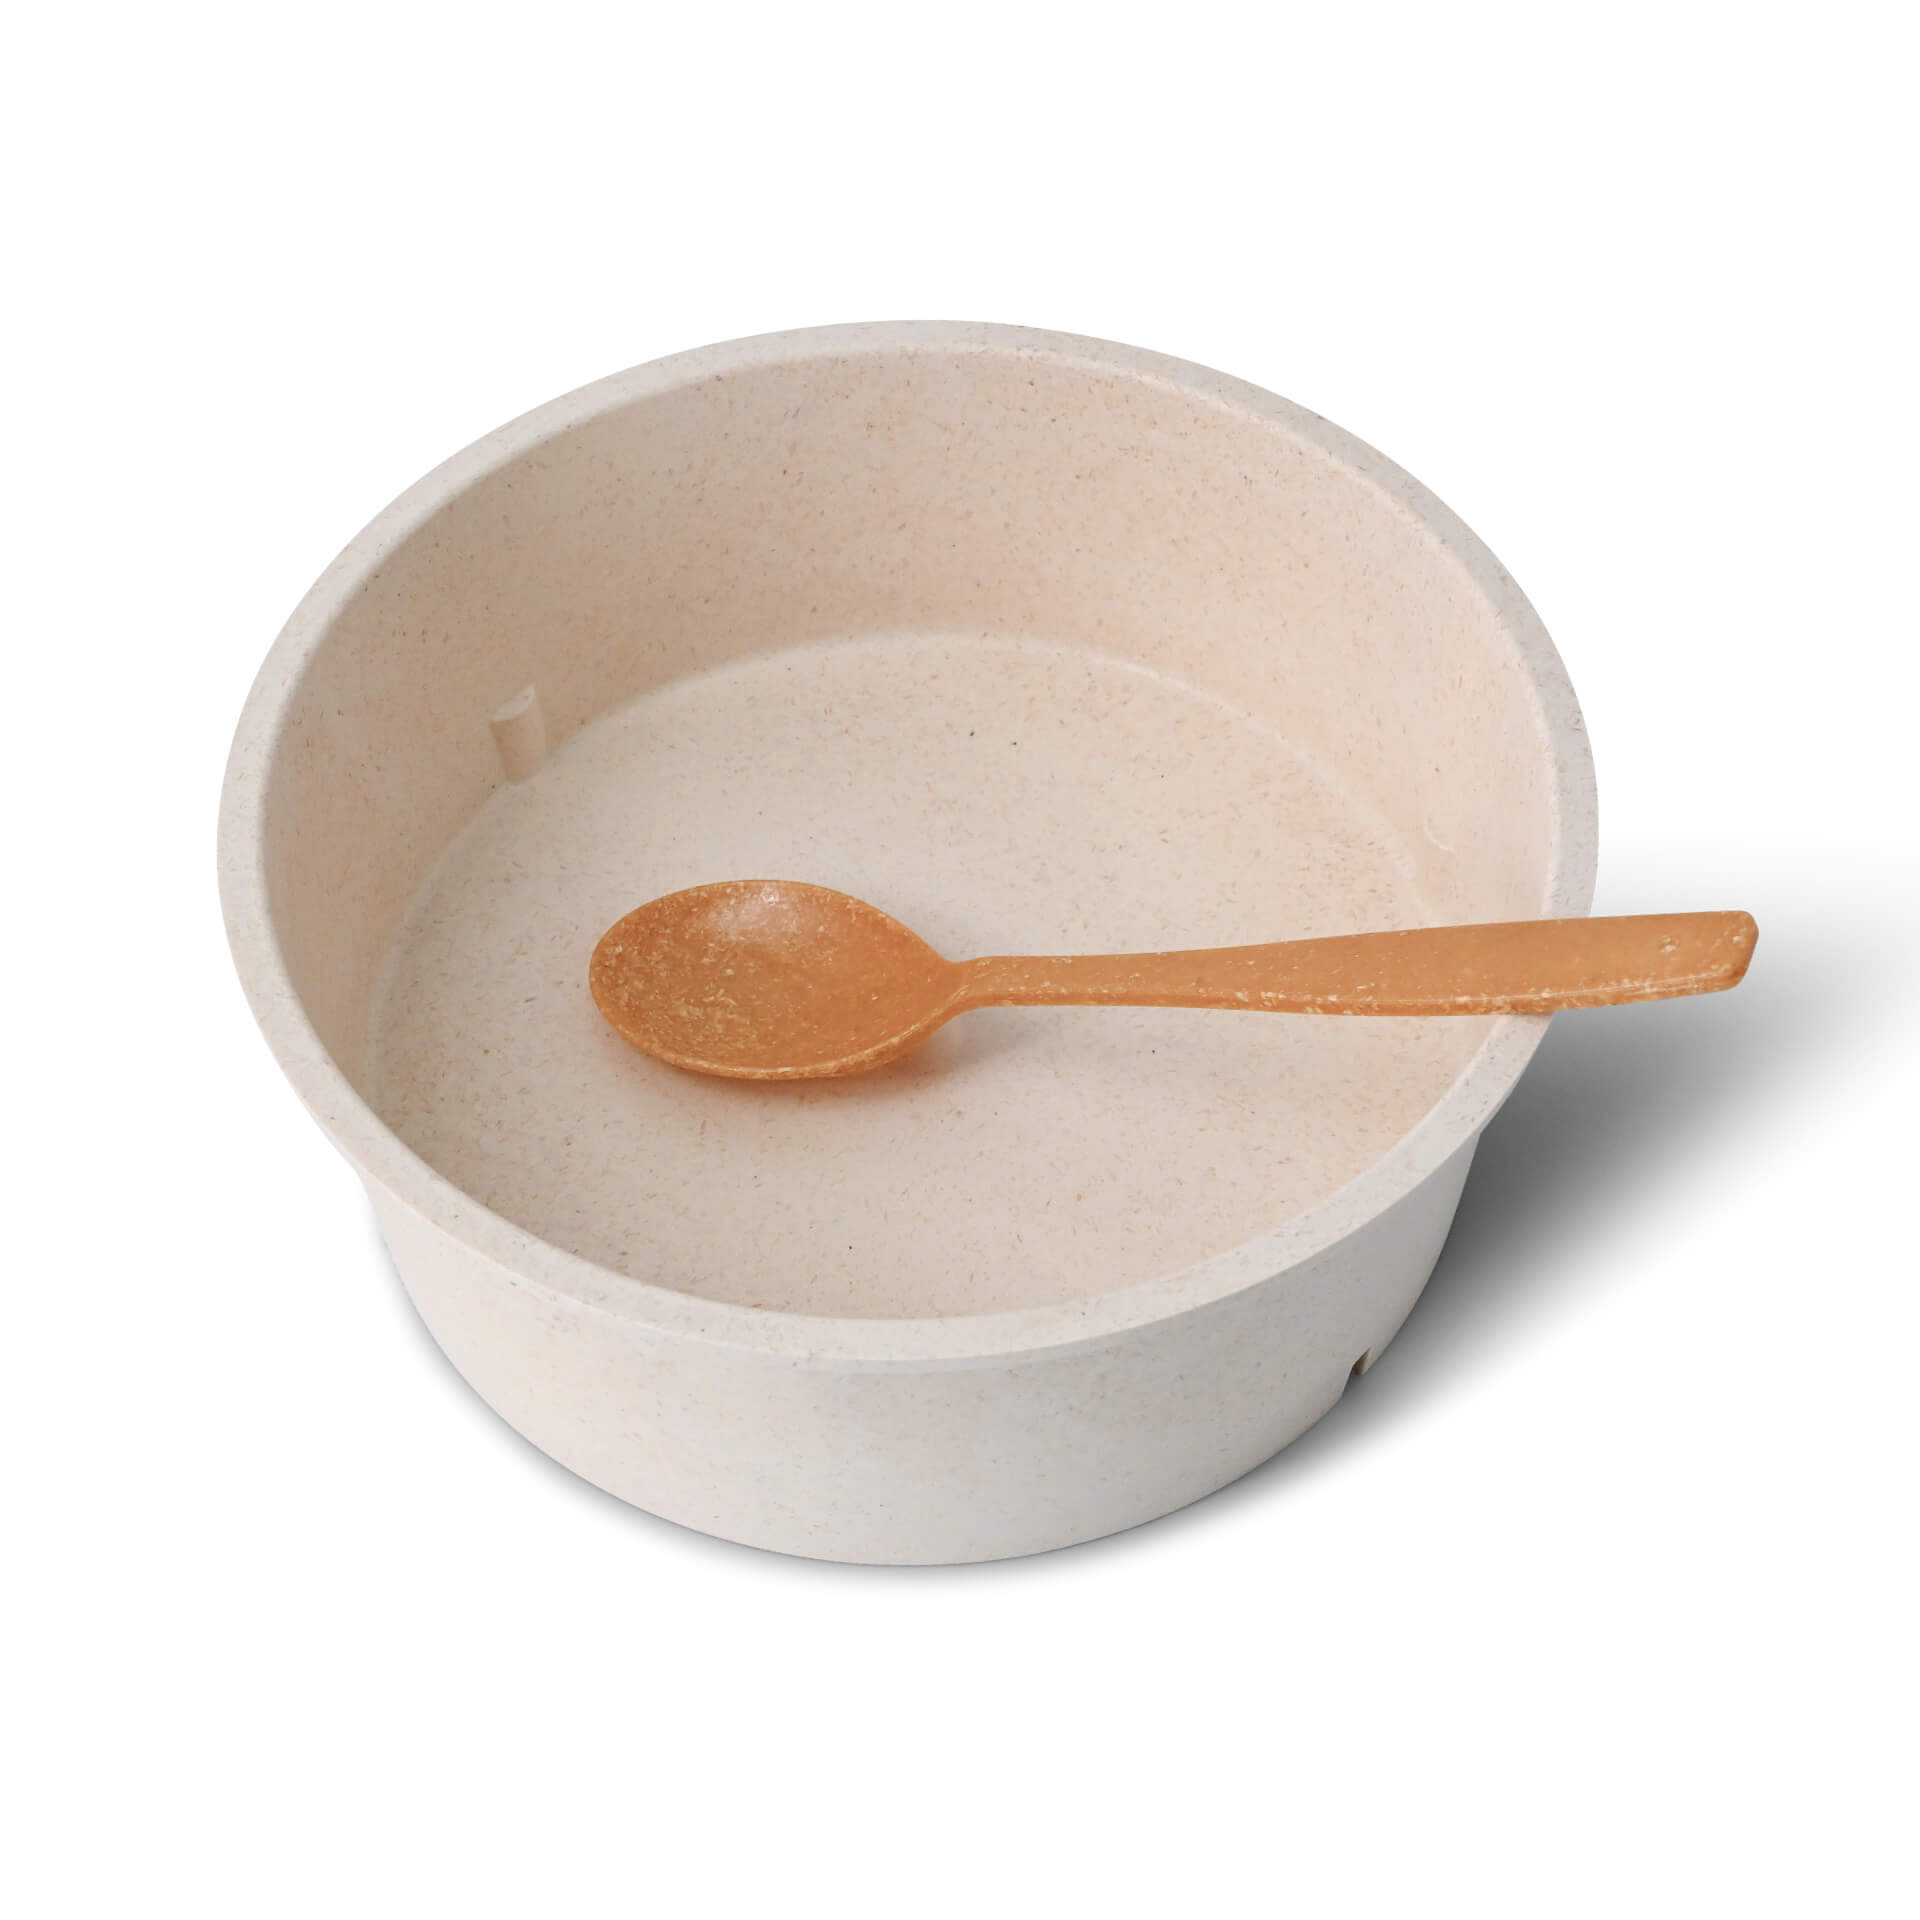 Mehrweg-Schalen "Häppy Bowl®" 1000 ml, Ø 185 mm, Cashew / creme-weiß